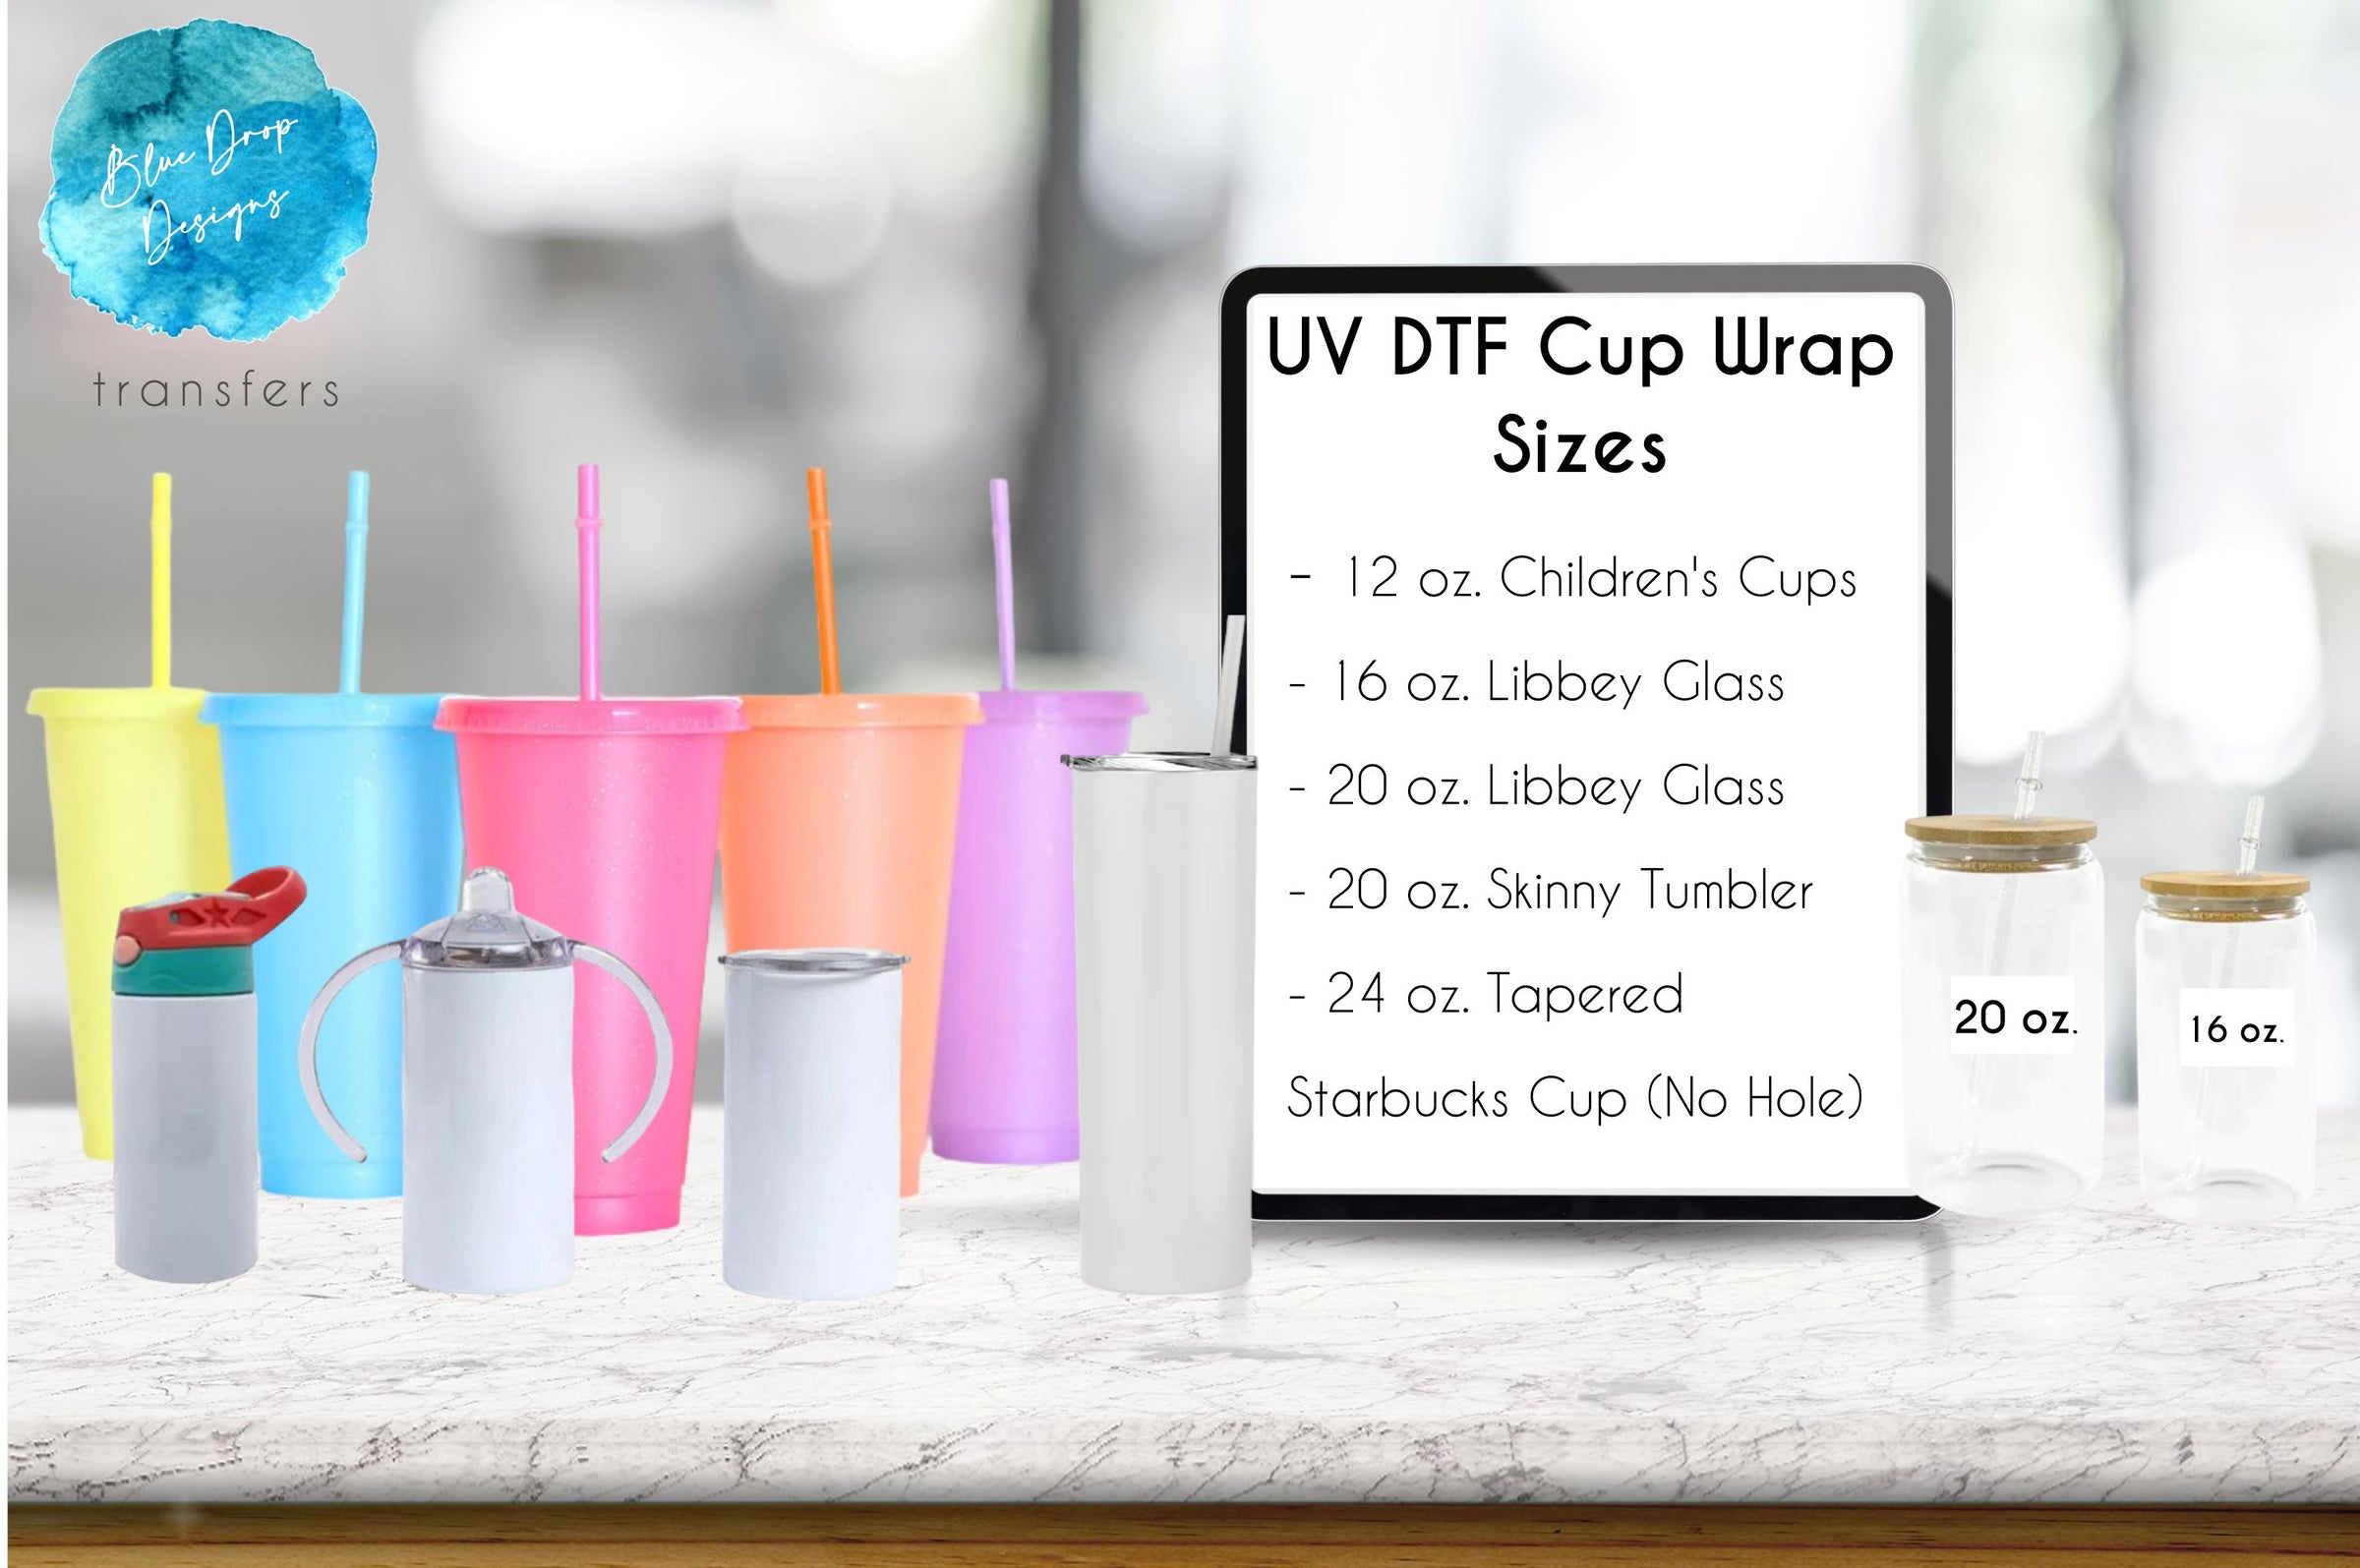 Wednesday - 16 oz Libbey Cup Wrap